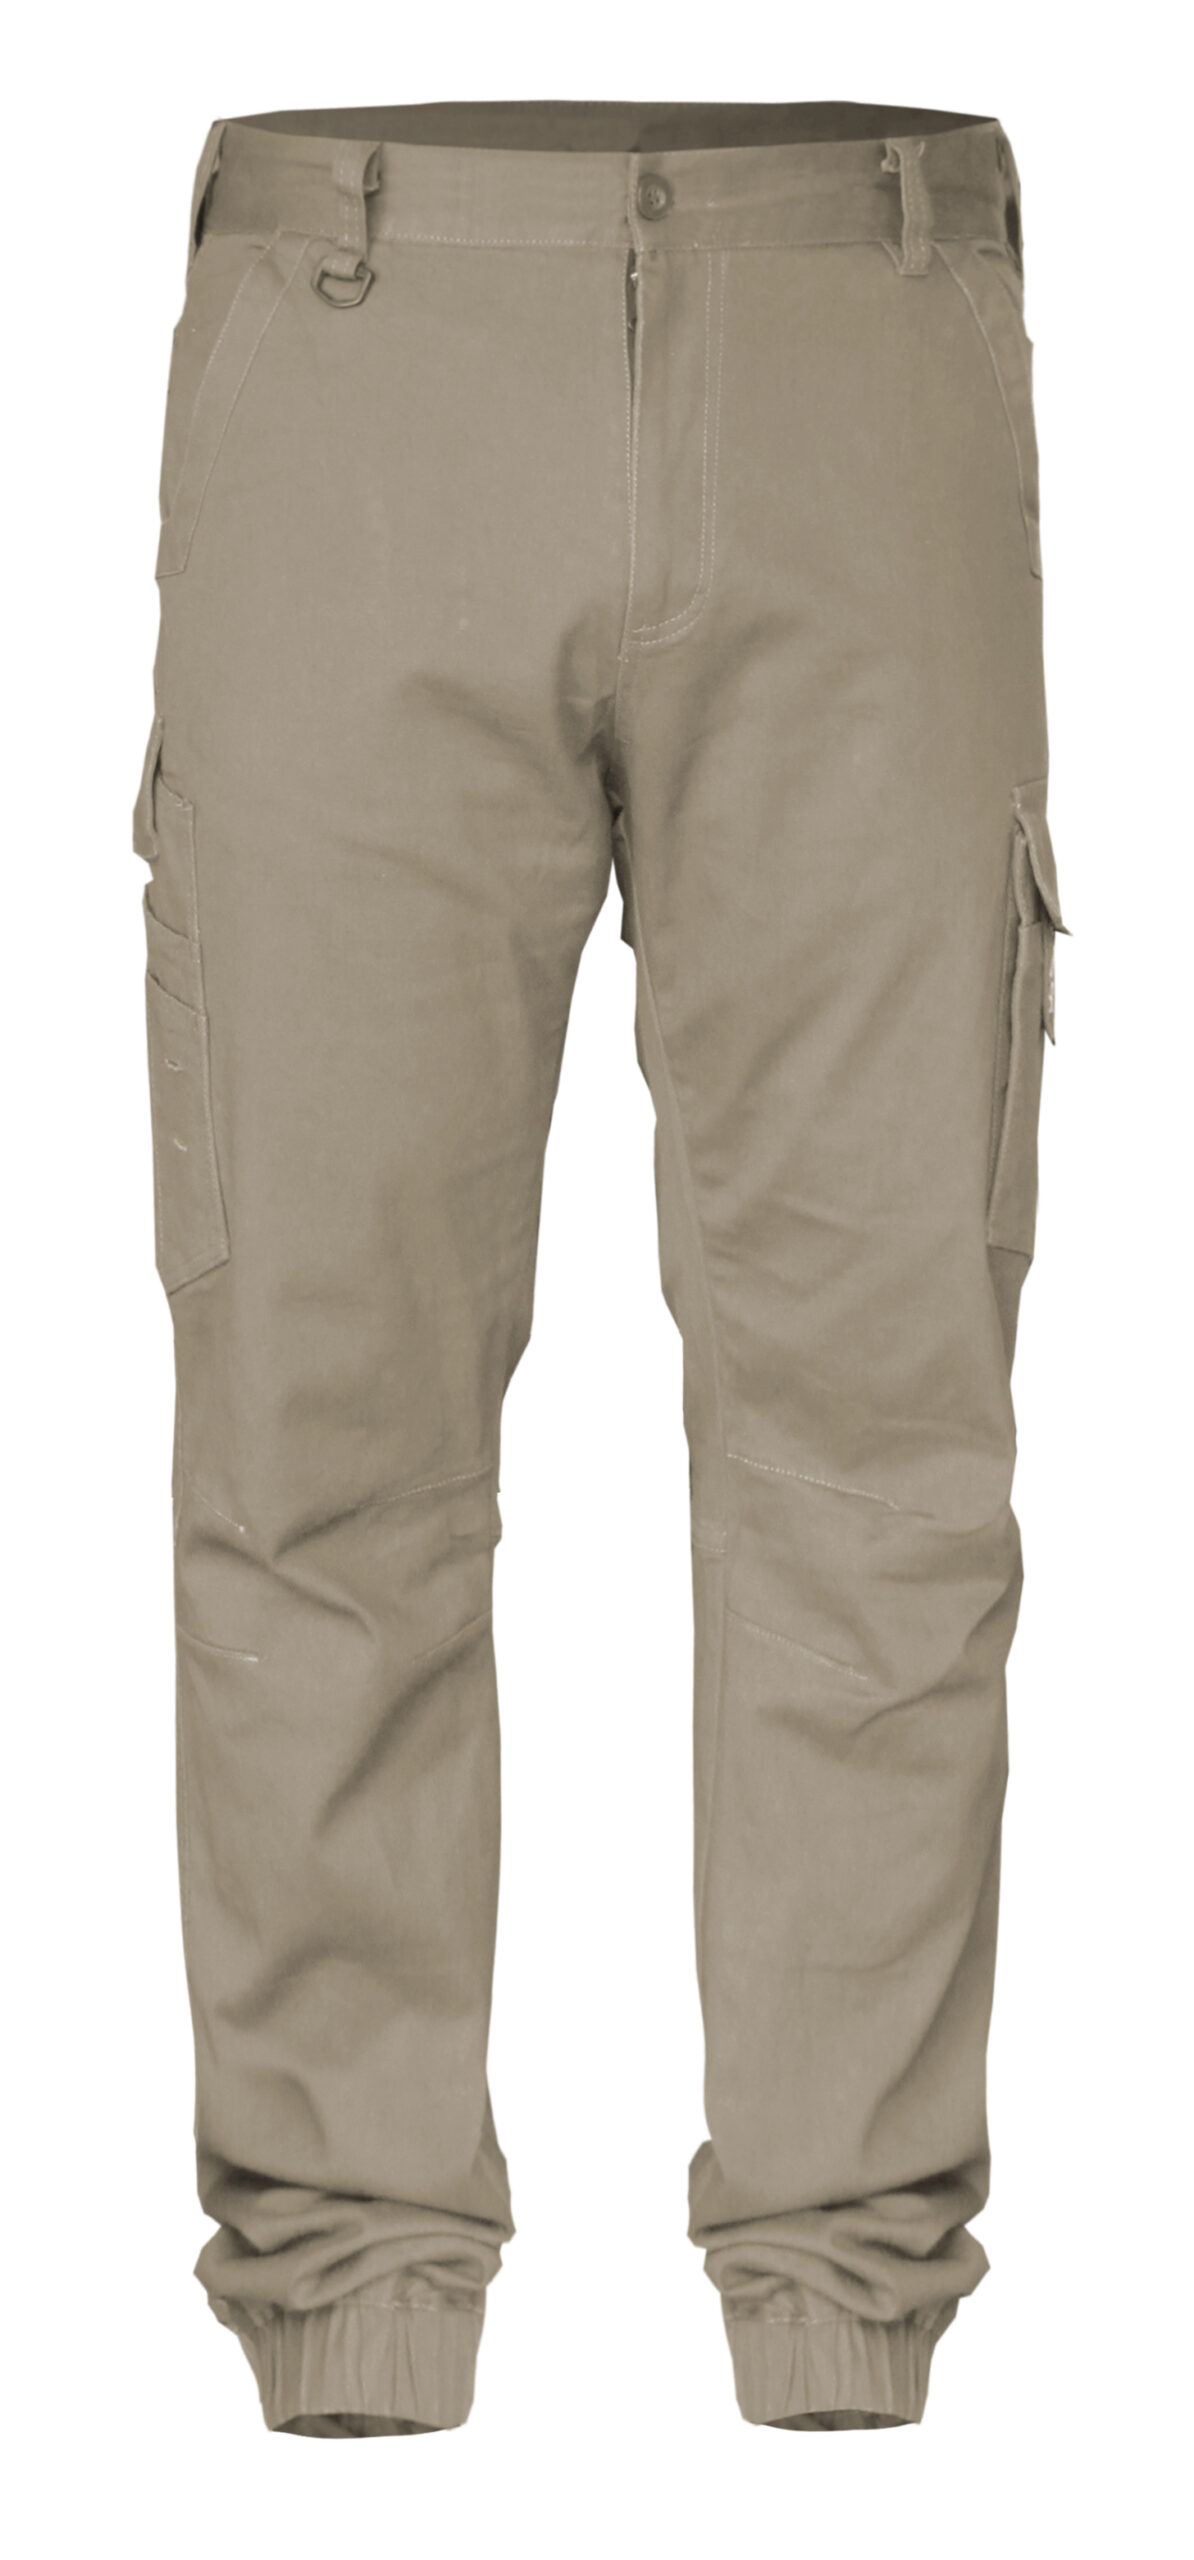 Work Cargo Pants Slim Fit Elastic Ankle Cuff - goodgearnation